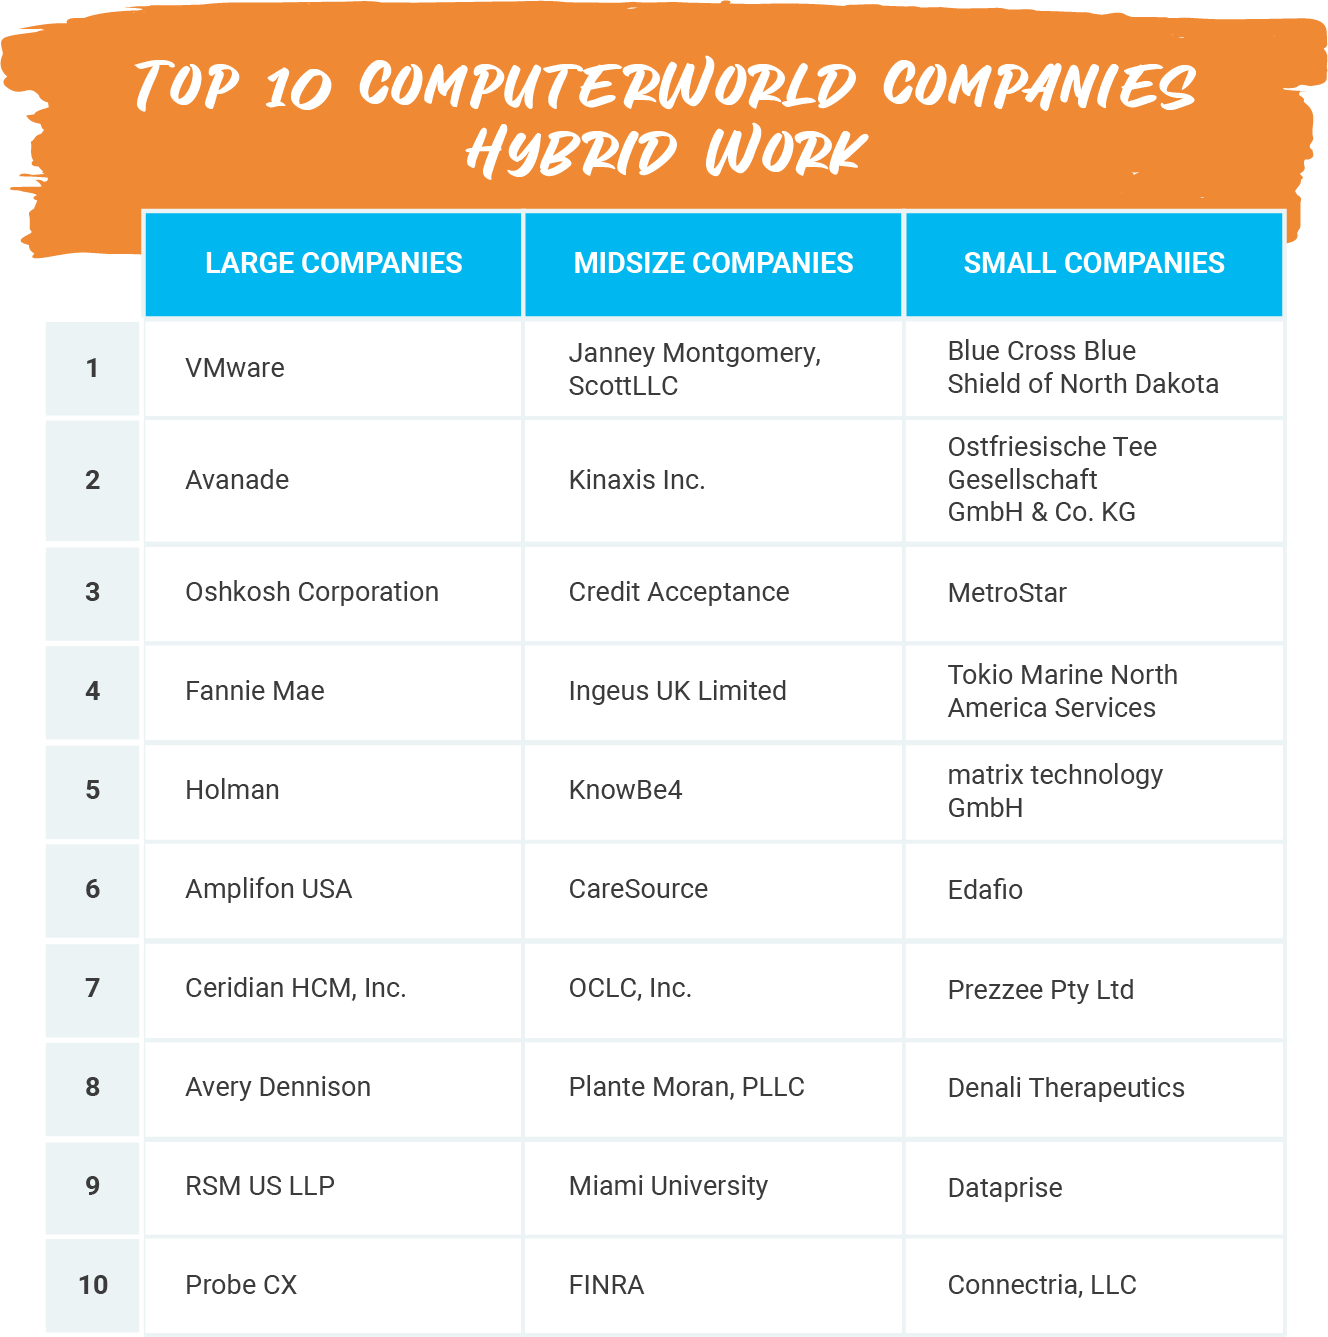 P_Web_Top 10 ComputerWorld Companies - Hybrid Work